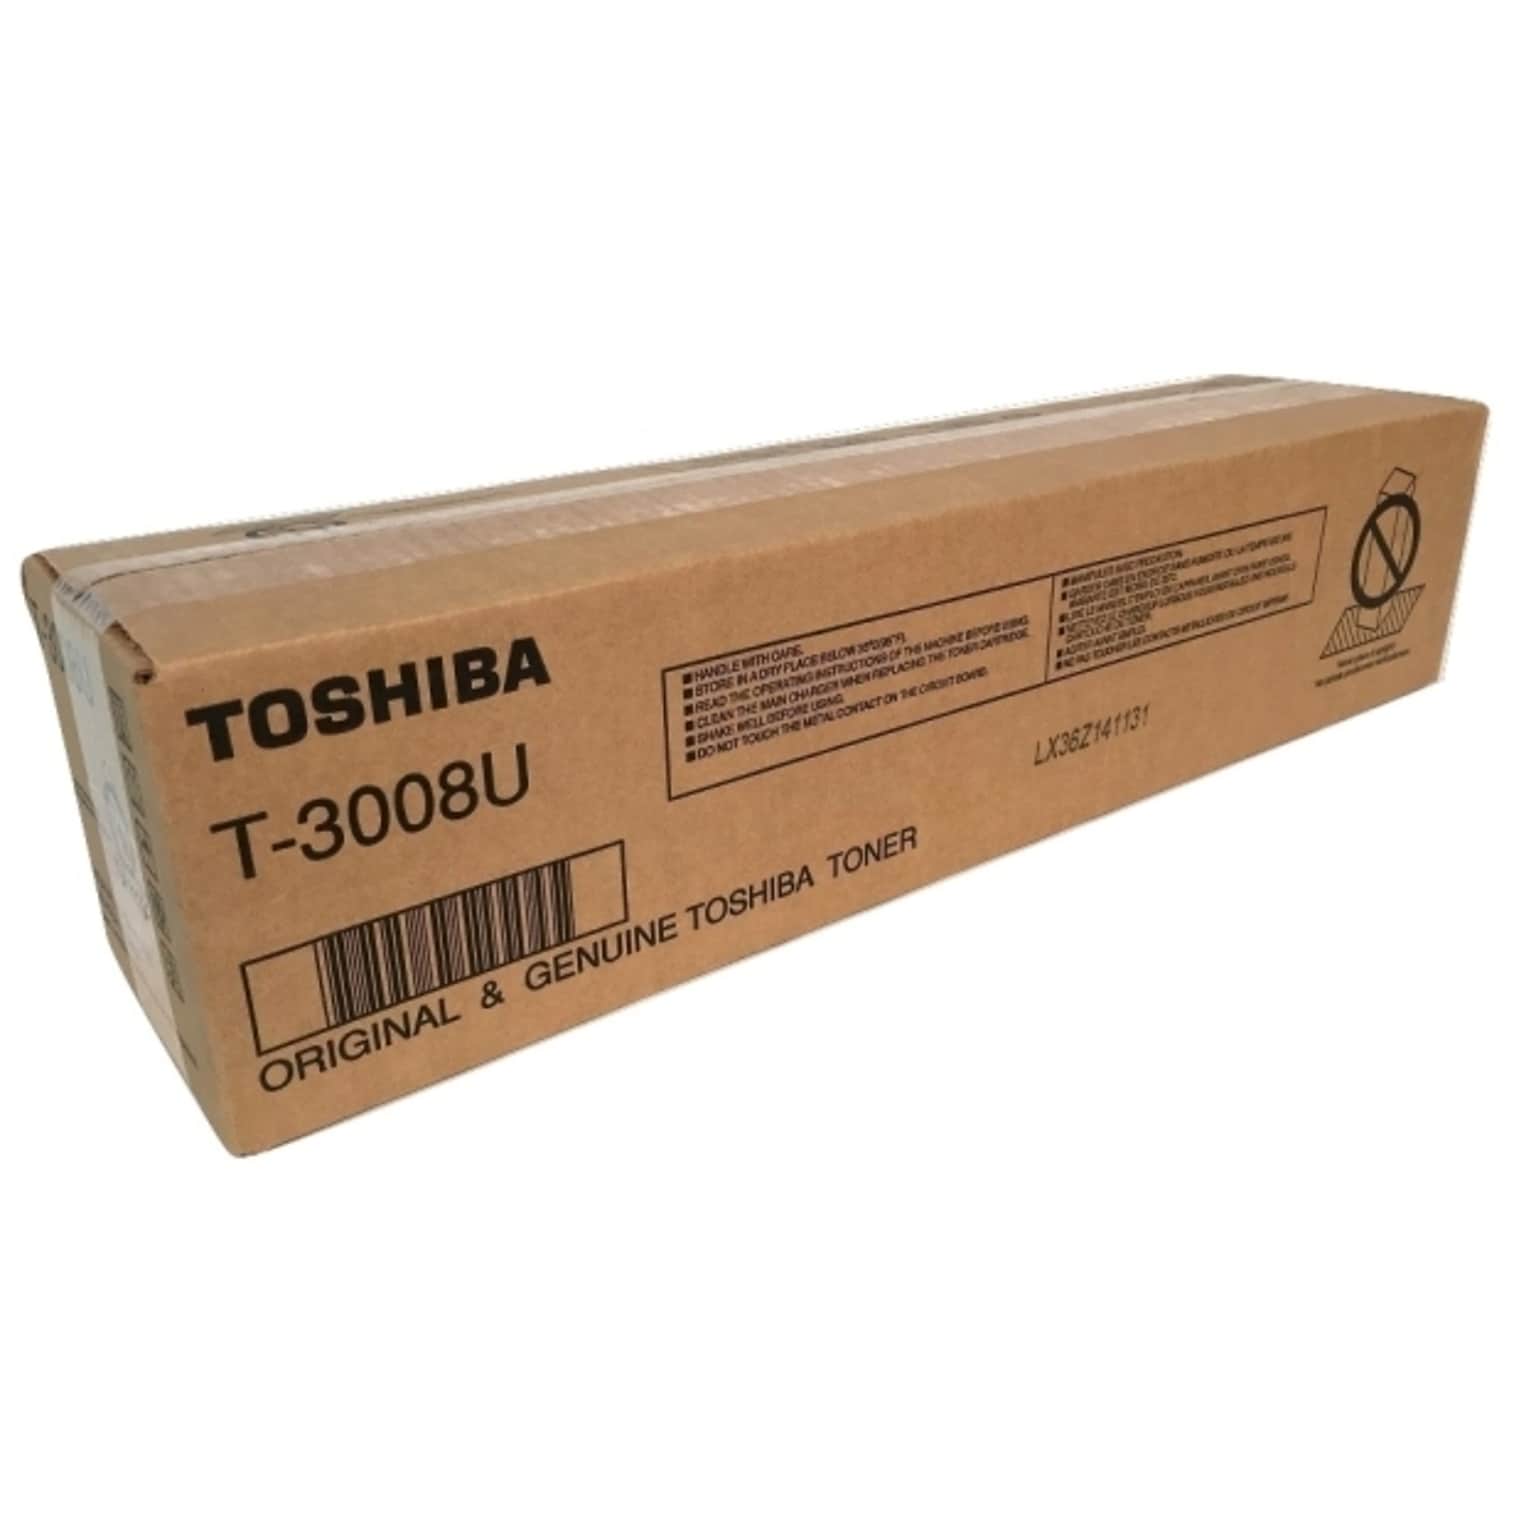 Toshiba 2008/T-3008U Black Standard Yield Toner Cartridge